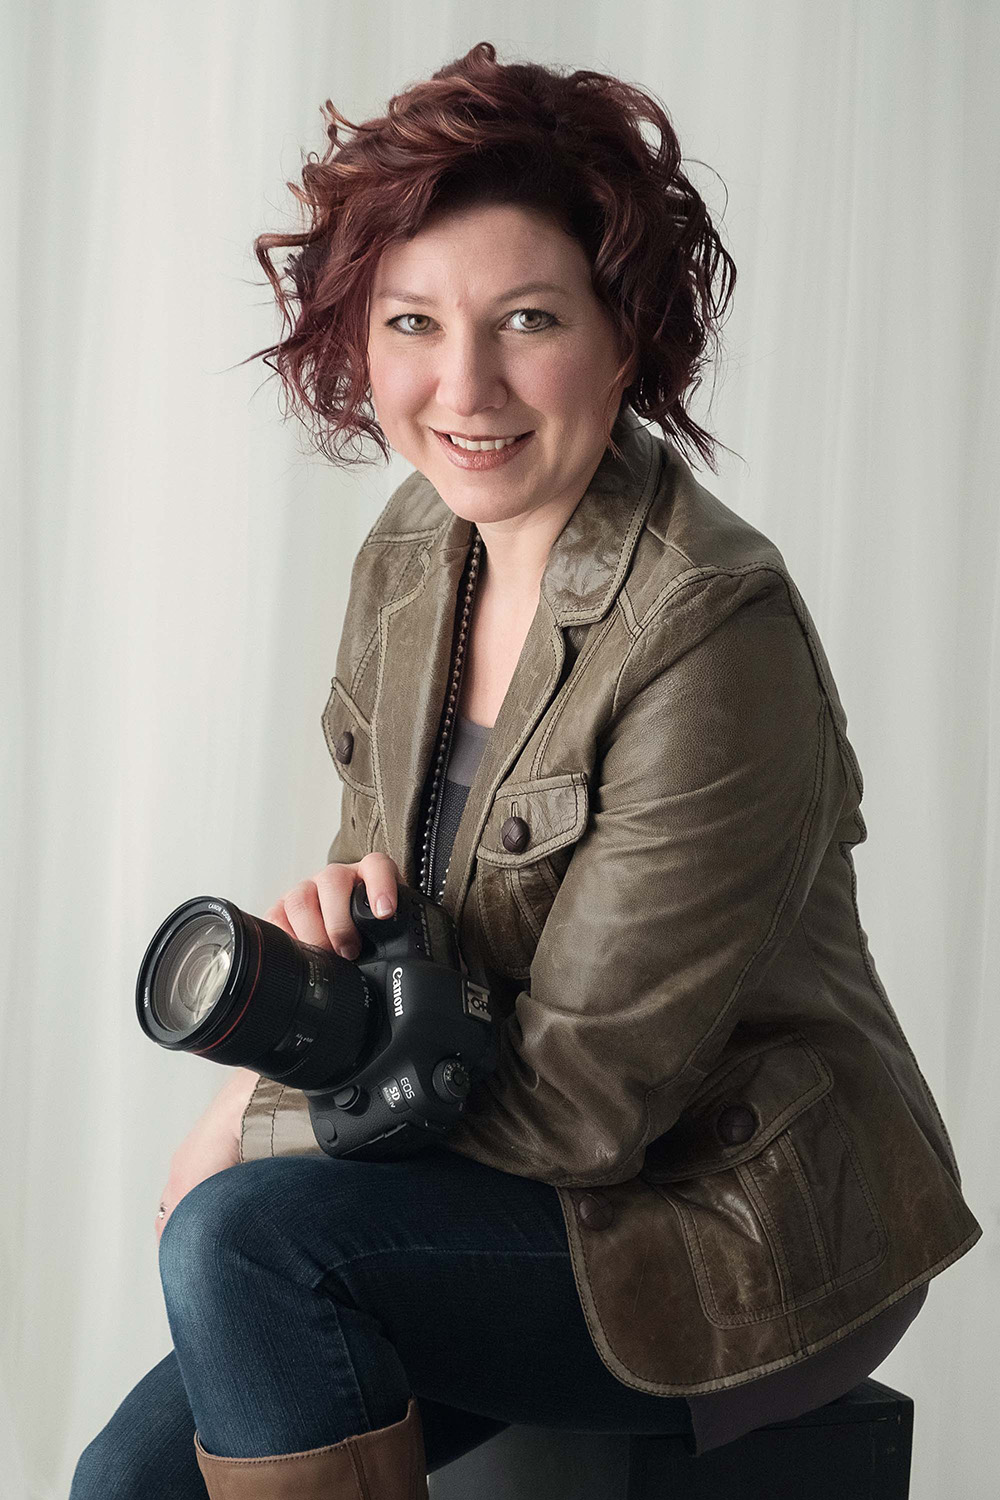 Studio portrait of Helga Himer of Helga Himer Photography, holding her choice Canon camera.